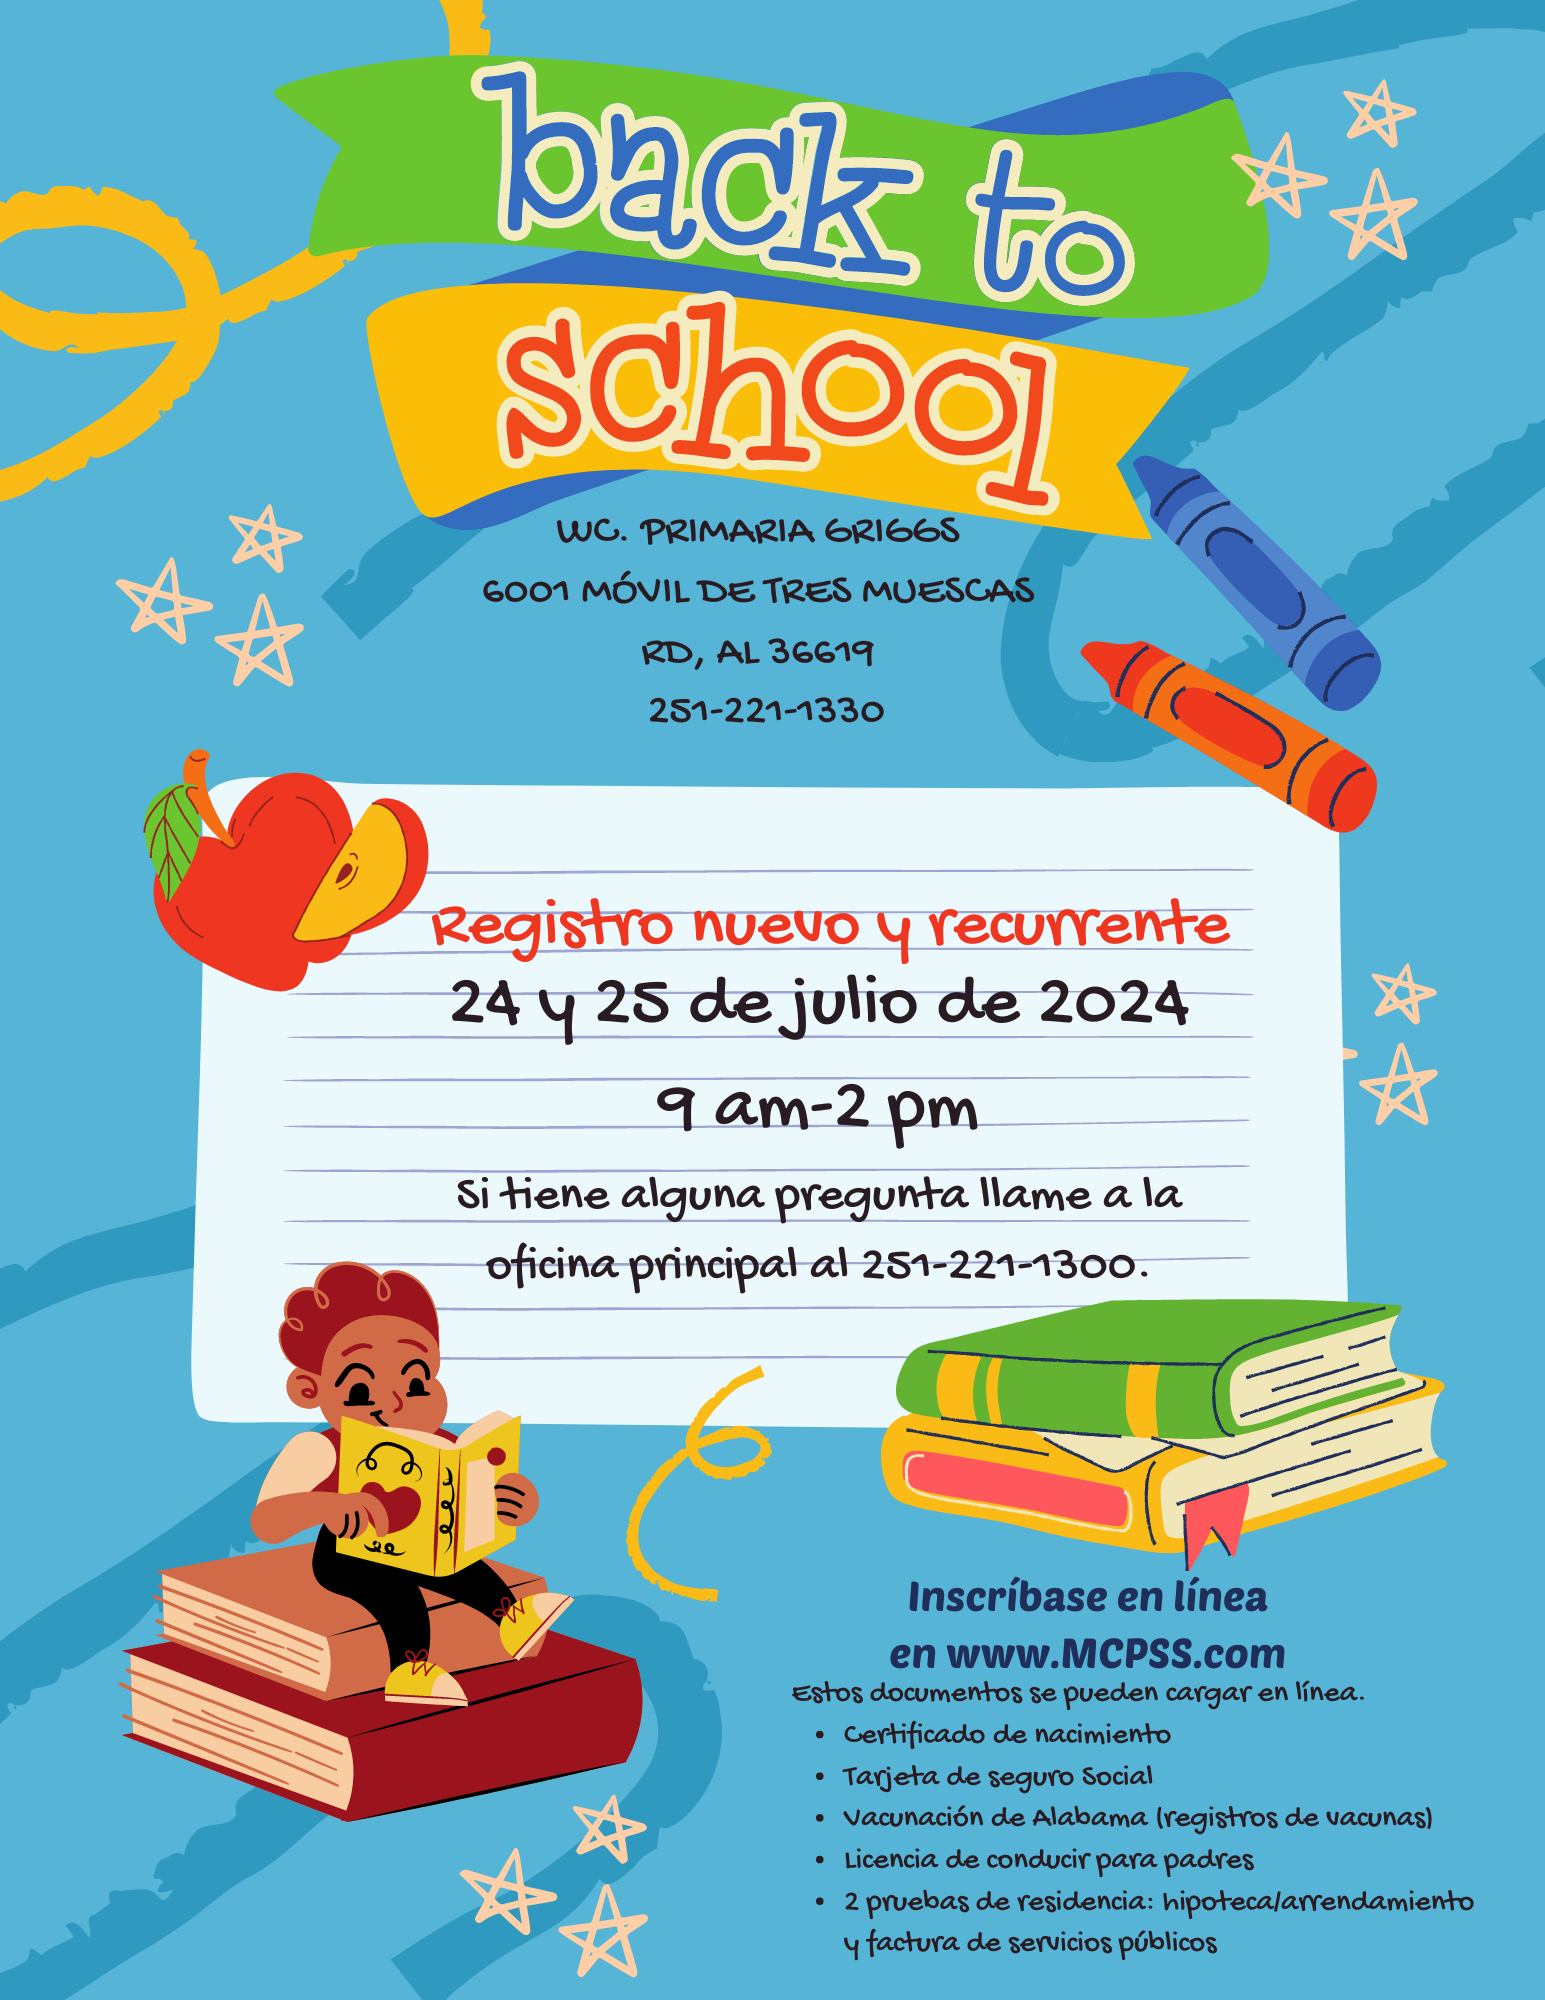 Registration Information In Spanish